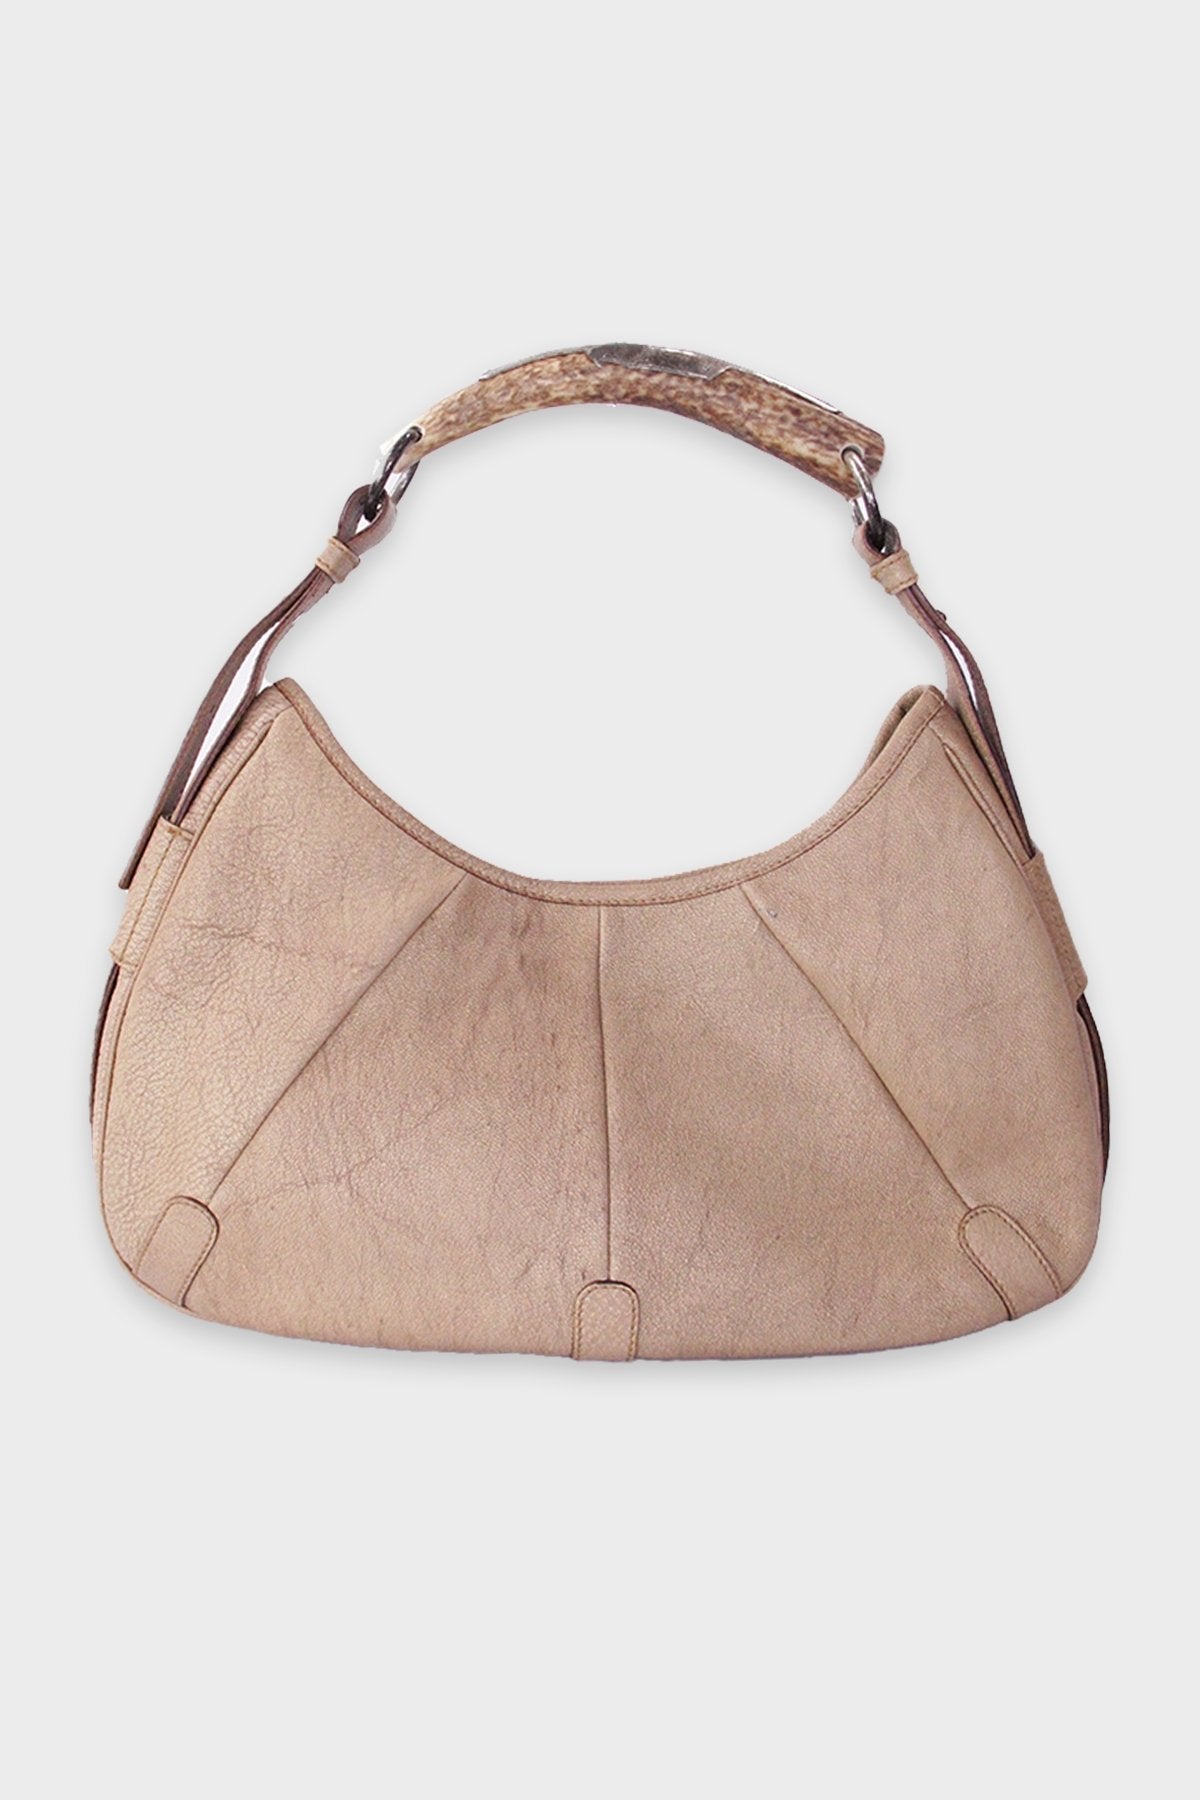 Saint Laurent Tan Leather Shoulder Handbag with Horn Handle - shop-olivia.com